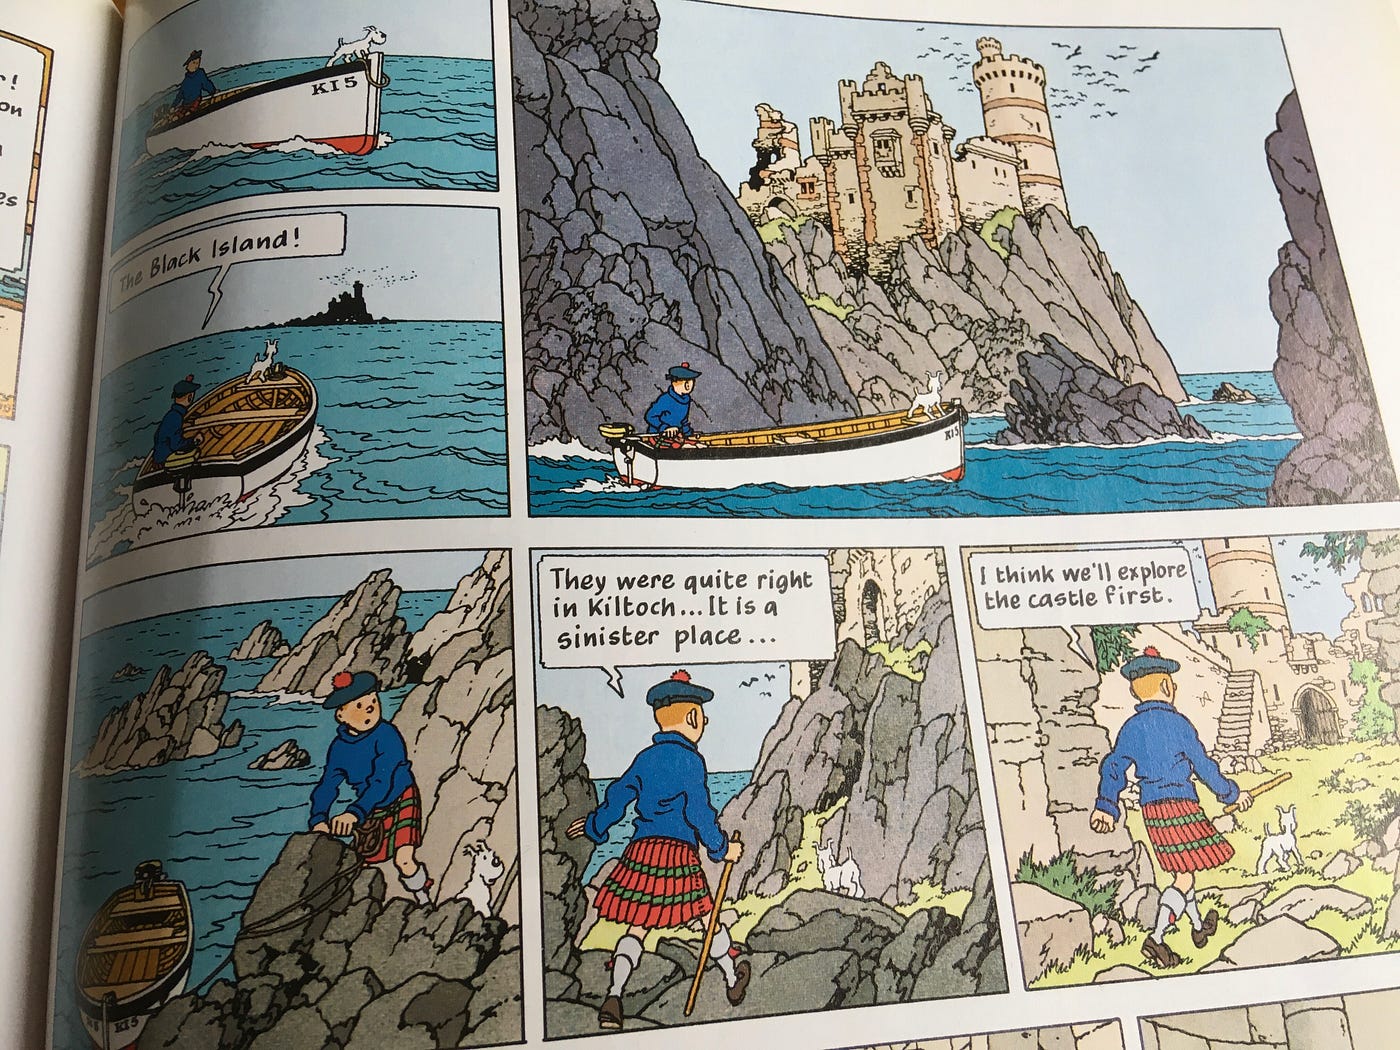 Amazing Adventures of Tintin- The Genius of Hergé - HubPages